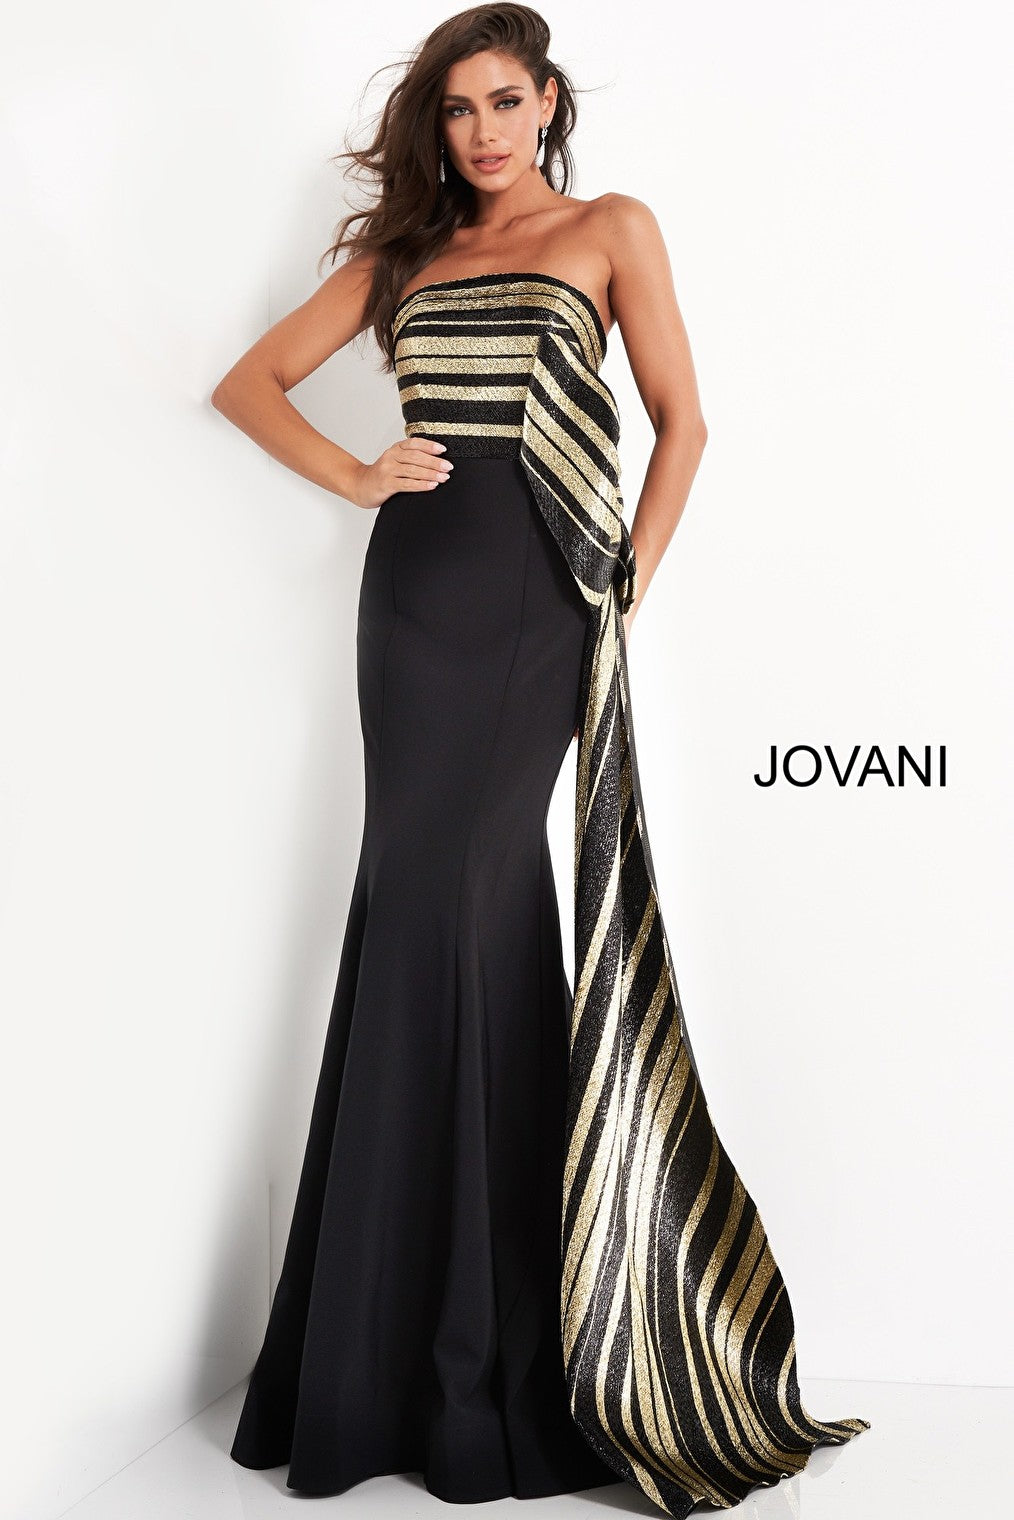 Black gold strapless Jovani evening dress 05084